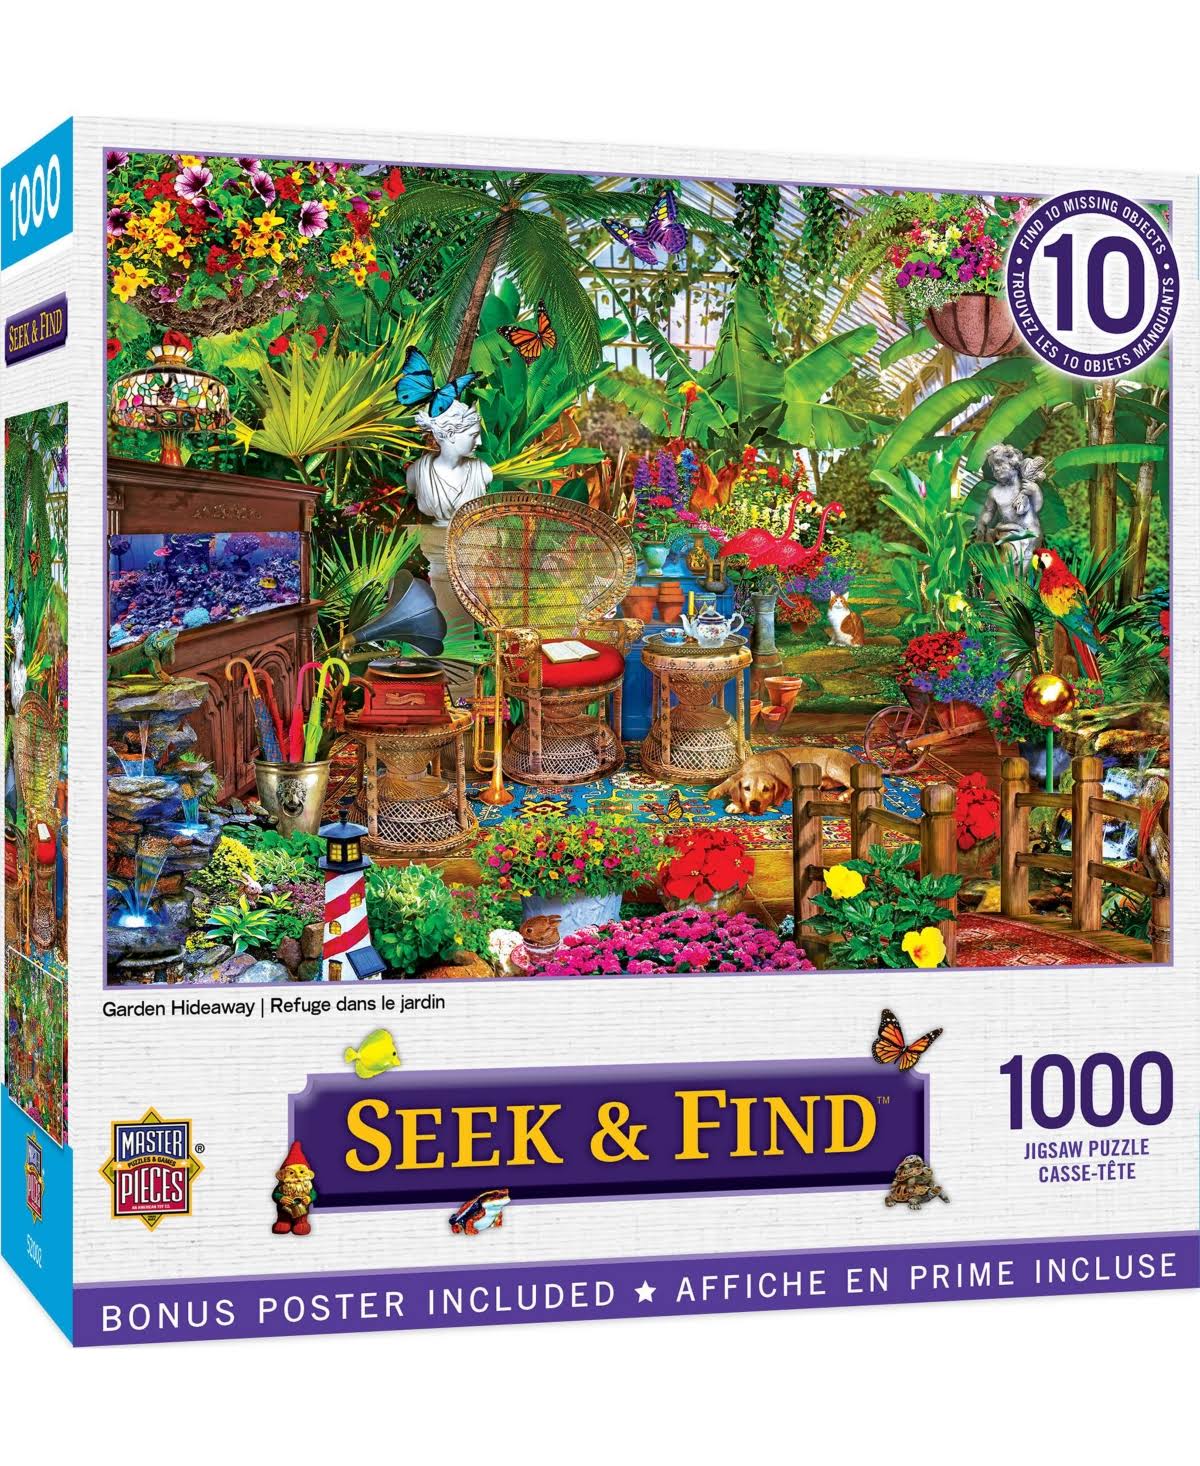 Masterpieces Puzzle Seek & Find Garden Hideaway Puzzle 1000 Piece Jigsaw Puzzle